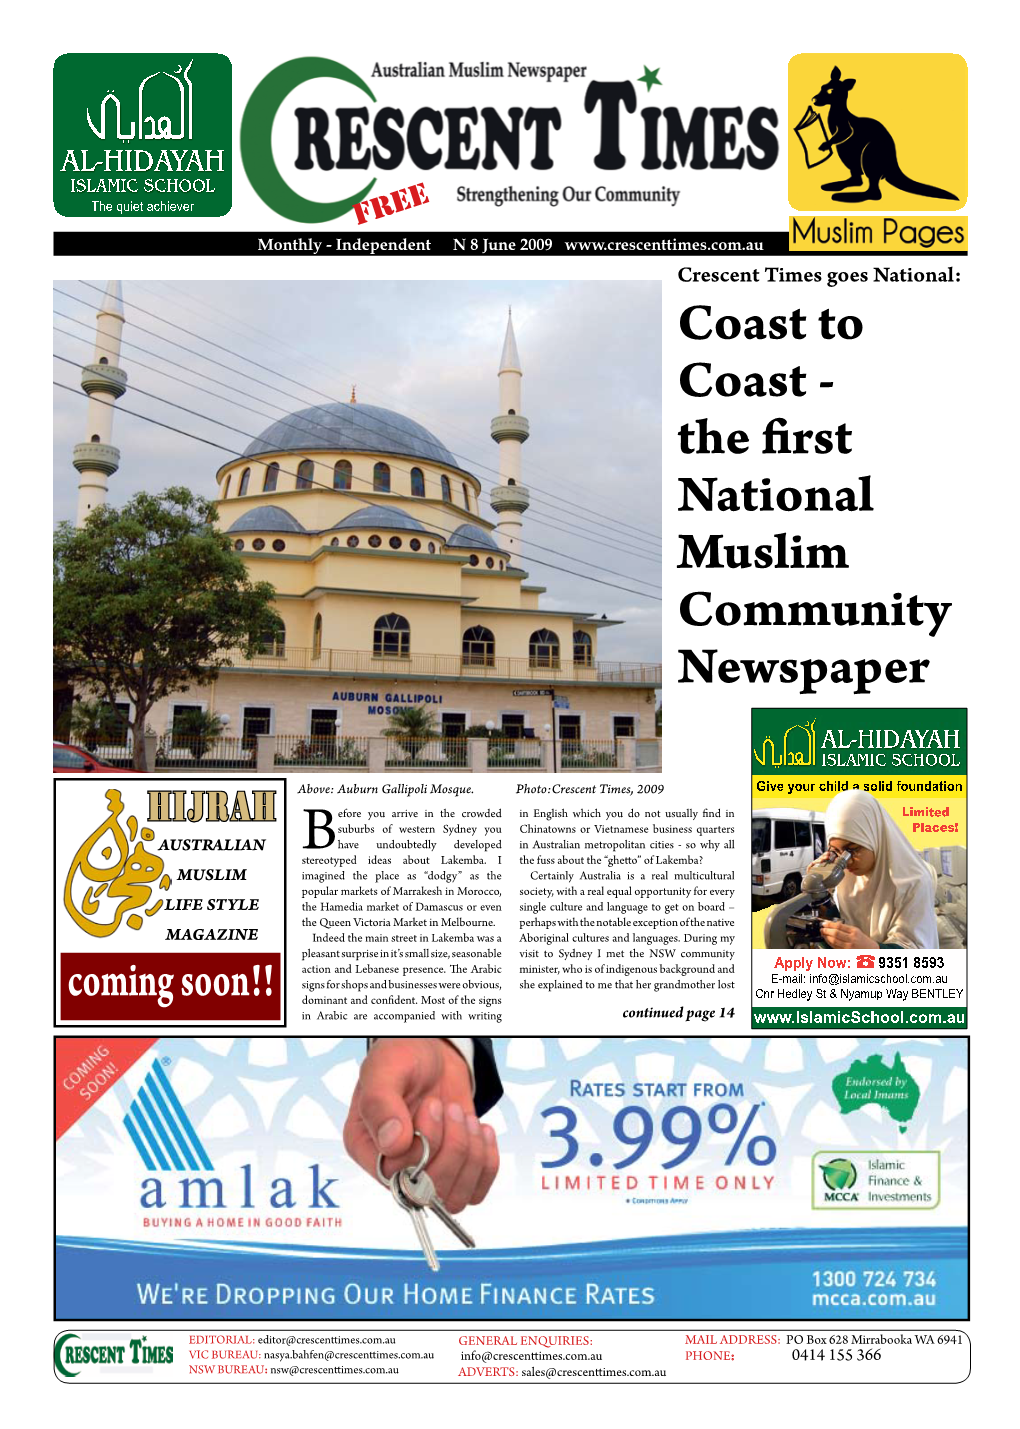 The First National Muslim Community Newspaper